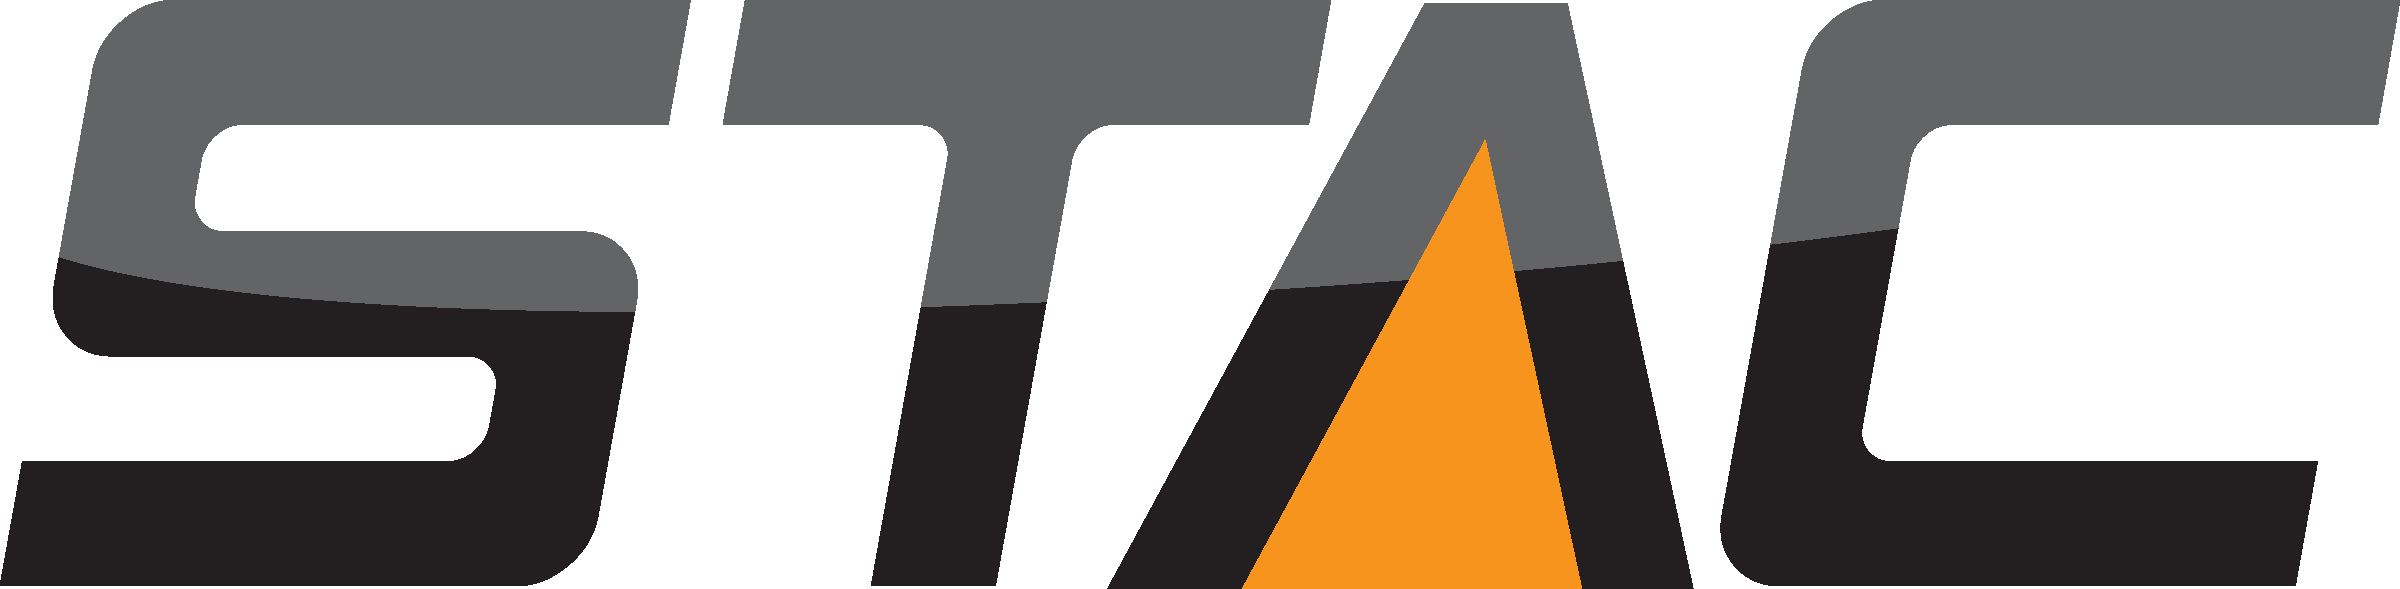 STAC performance logo